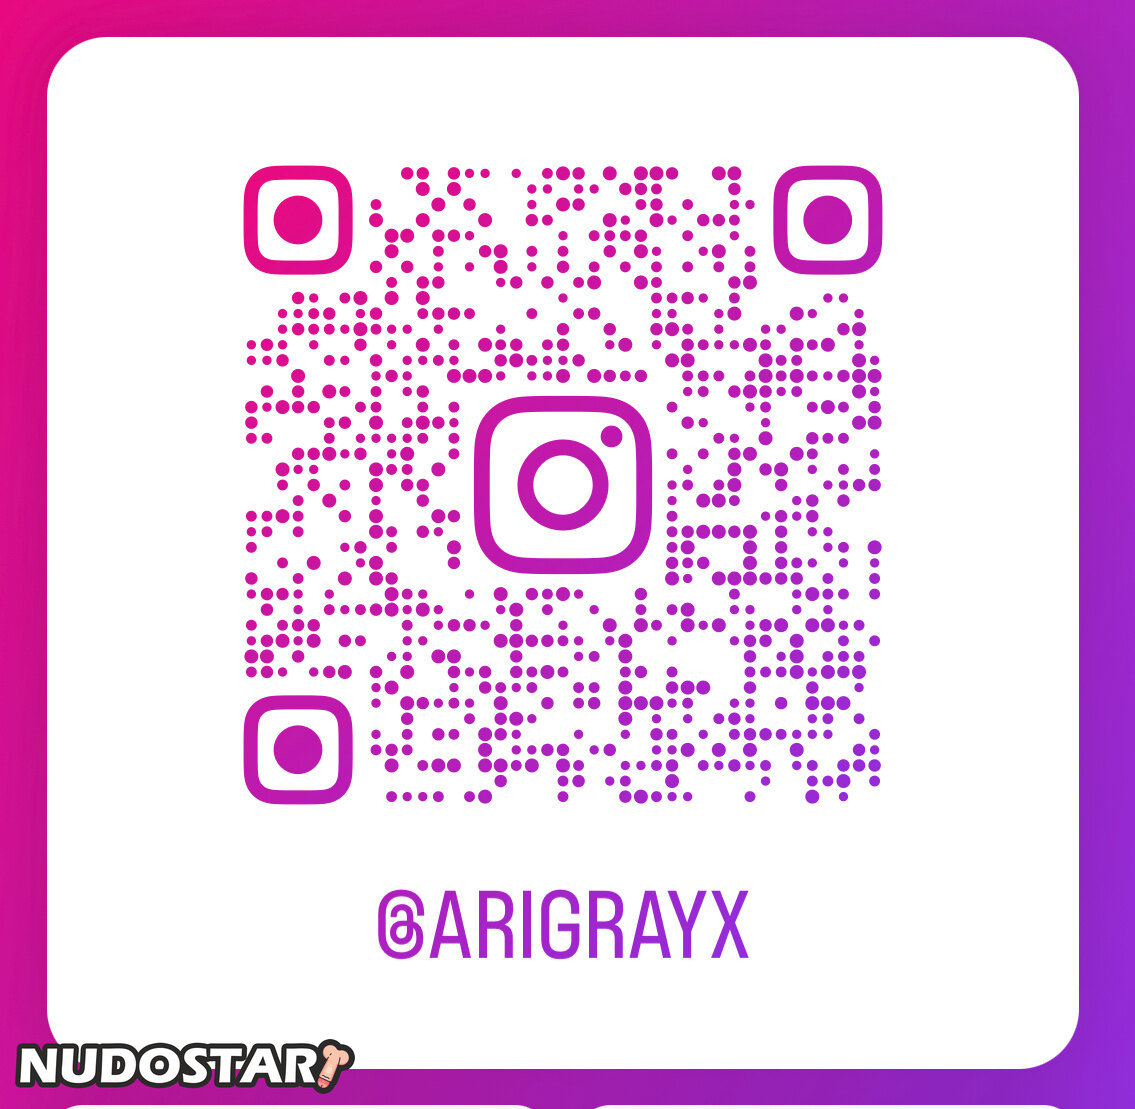 Ariagrayx_nude_leaks_nudostar.com_019.jpg